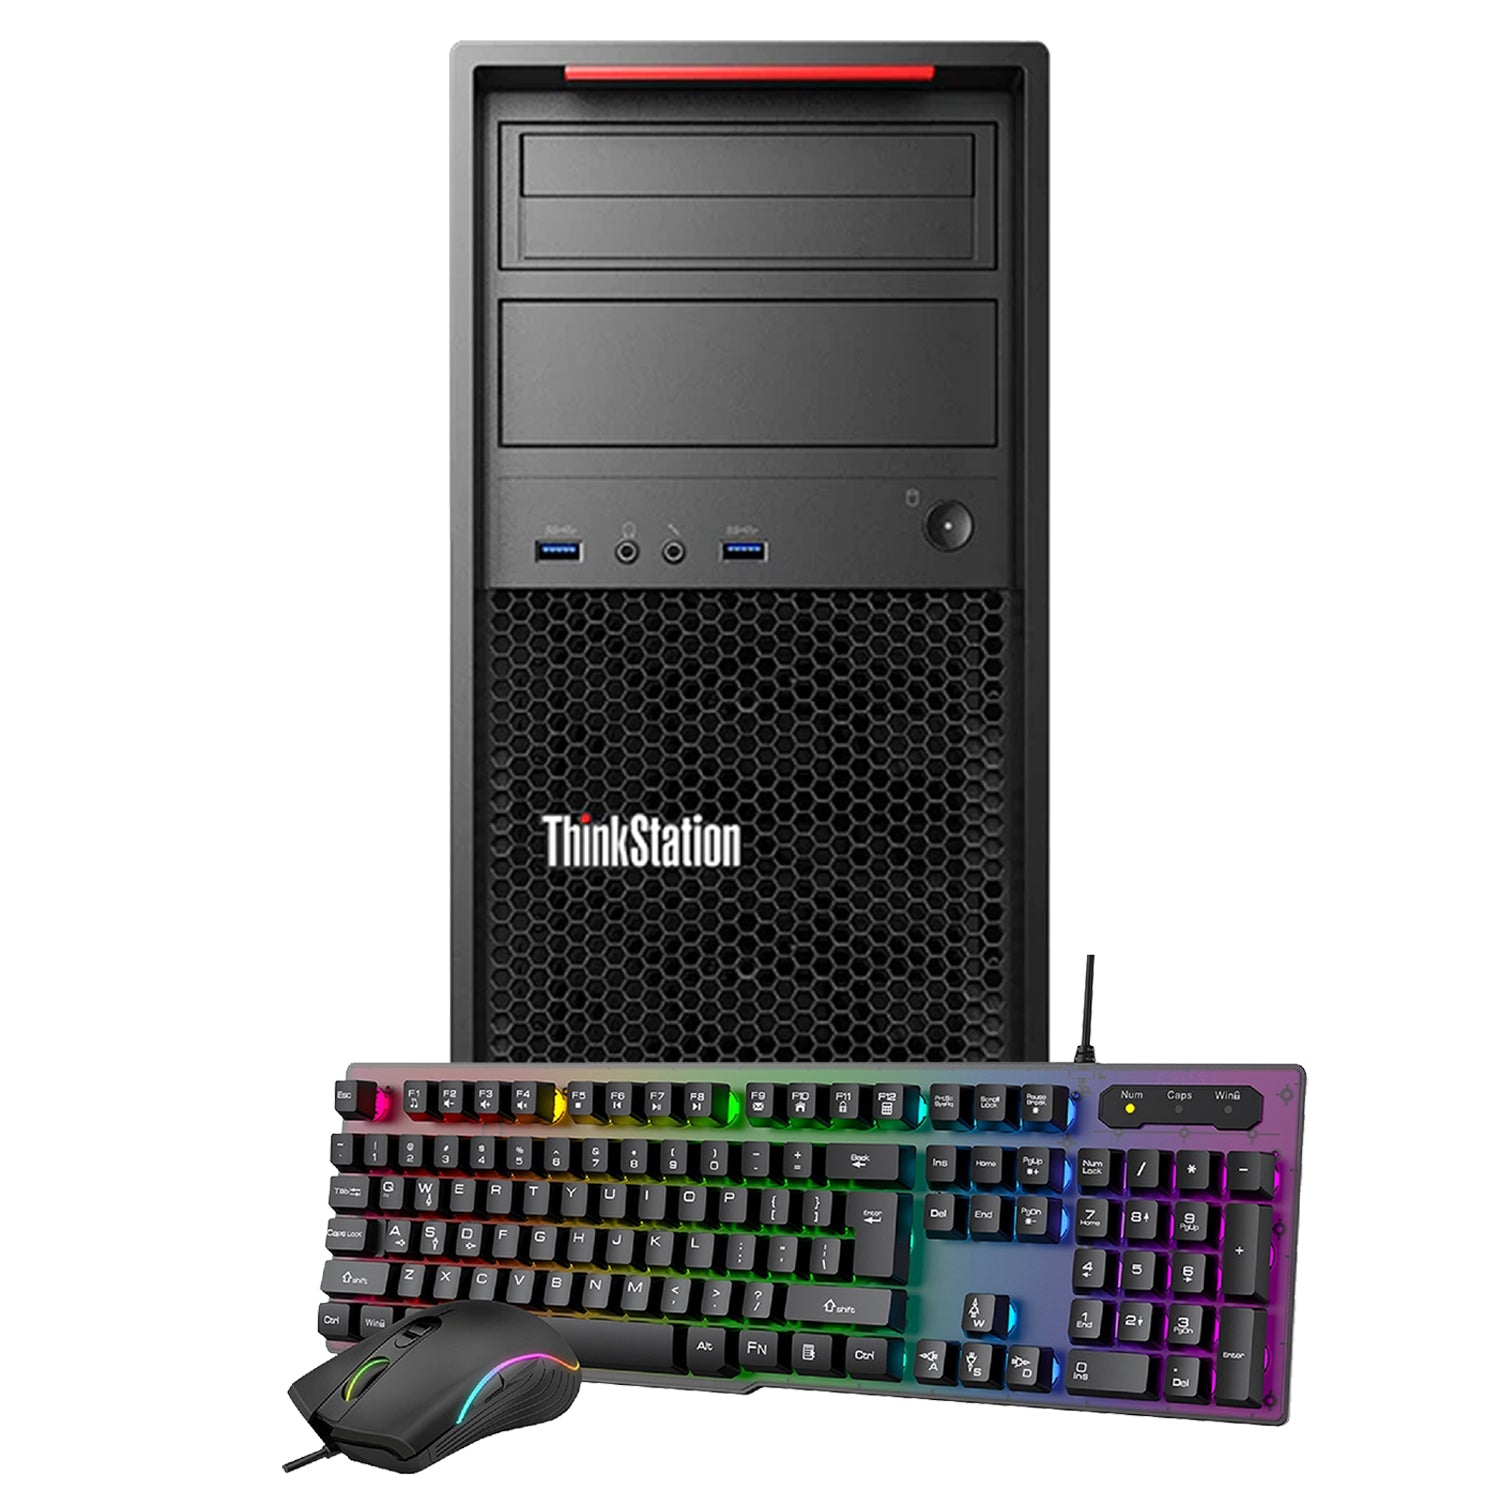 Lenovo ThinkStation P320 Tower Desktop Computer PC, Intel Xeon E3-1240 V6, 16GB - 32GB DDR4 RAM, 512GB - 2TB SSD, Windows 10 Pro, Gaming Keyboard and Mouse, WiFi + BT - Refurbished